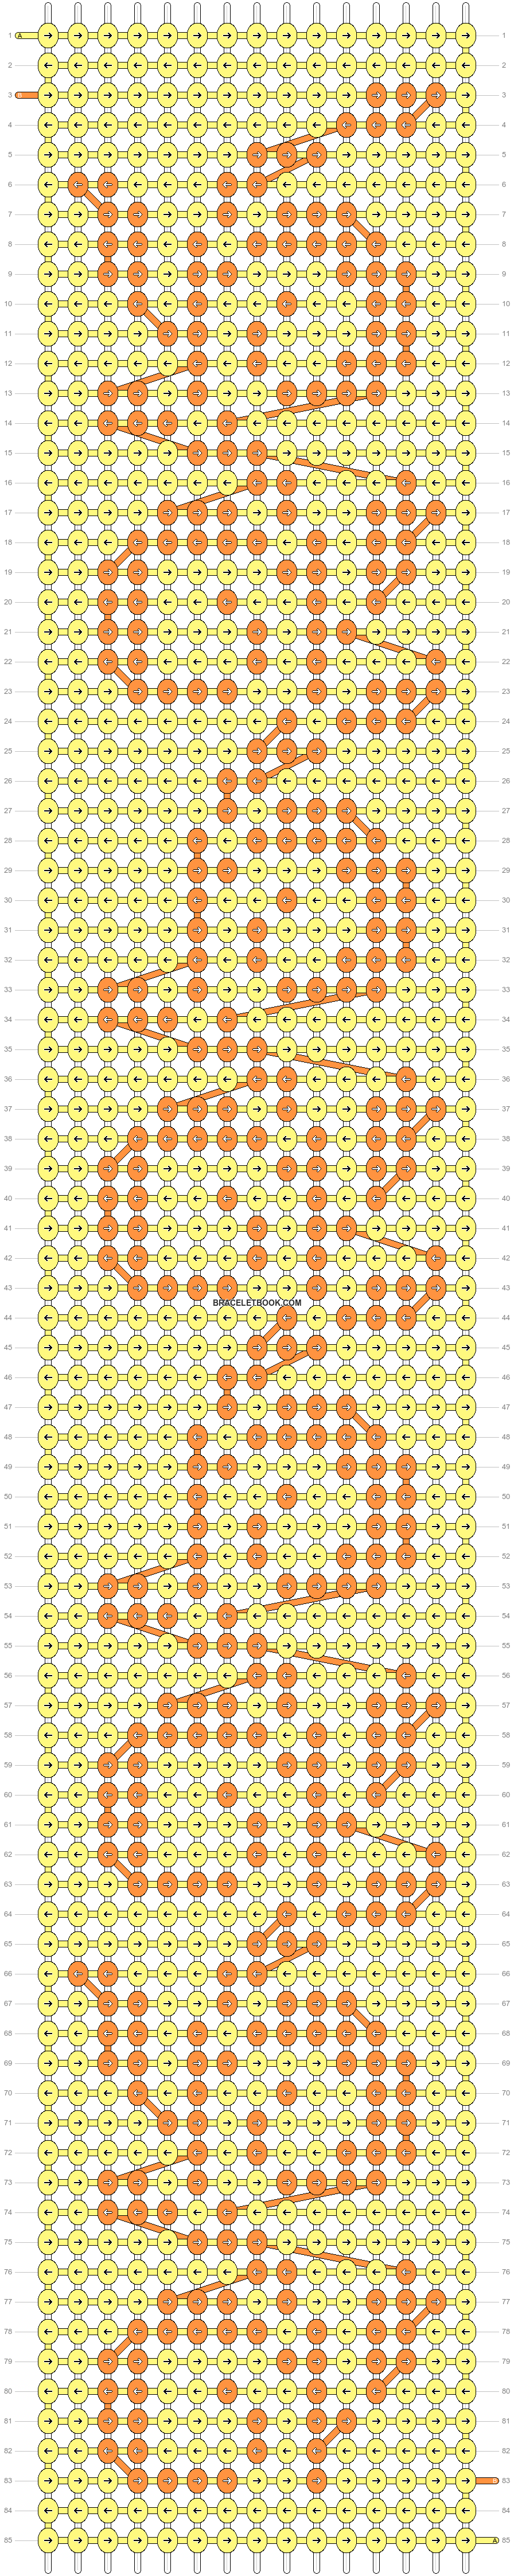 Alpha pattern #42366 variation #57841 pattern